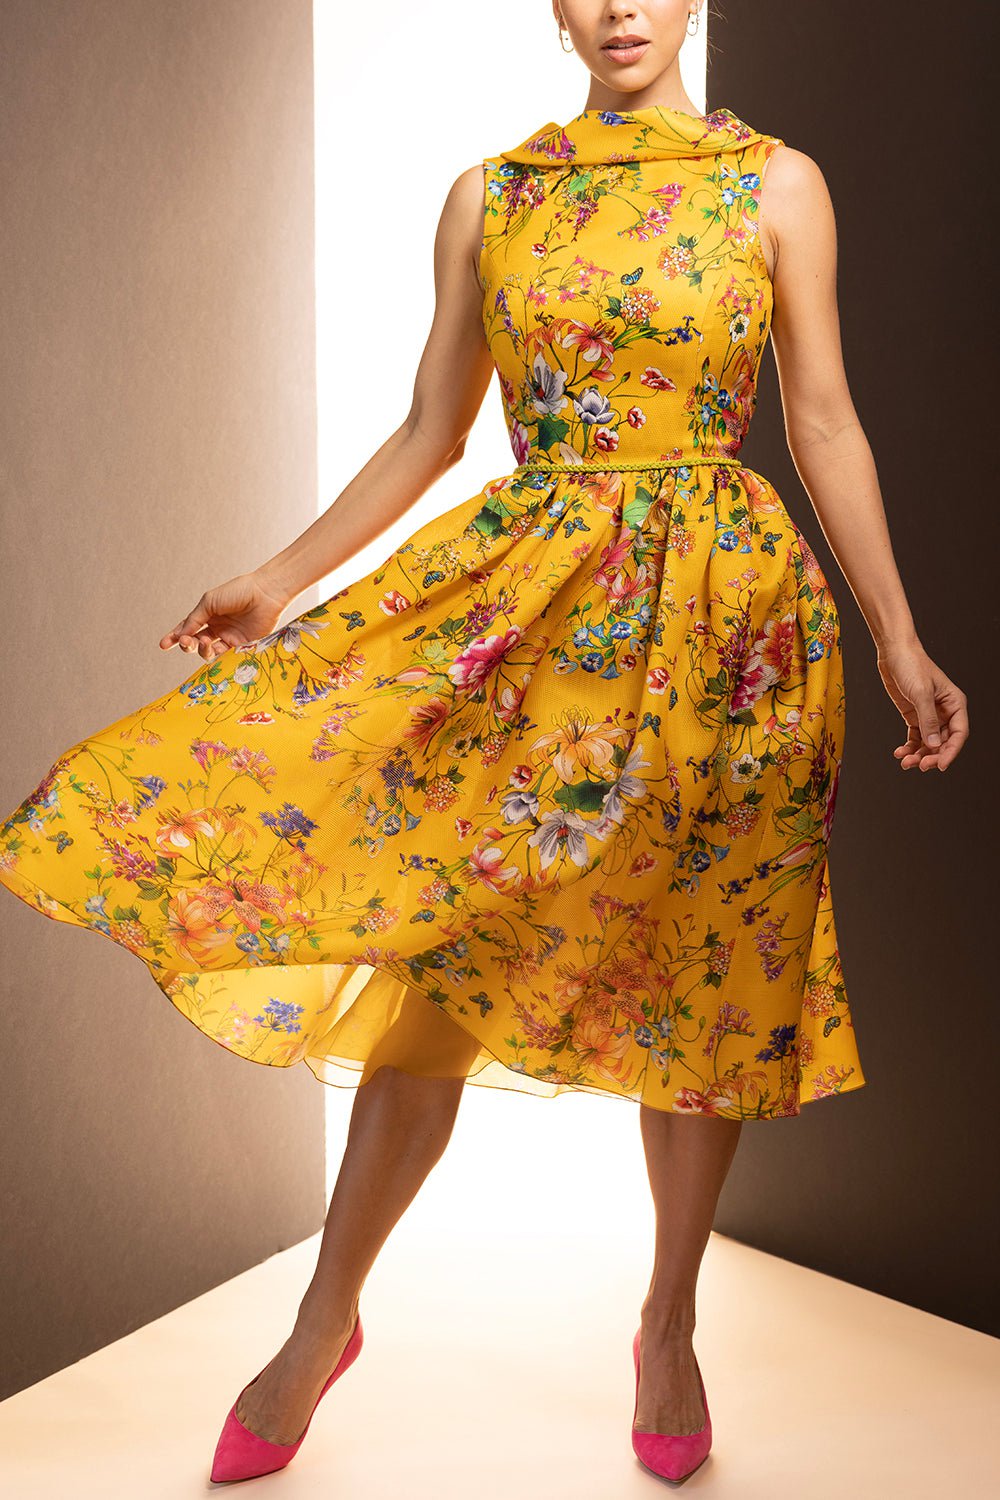 Positano Floral Dress - Yellow CLOTHINGDRESSCOCKTAIL NAEEM KHAN   